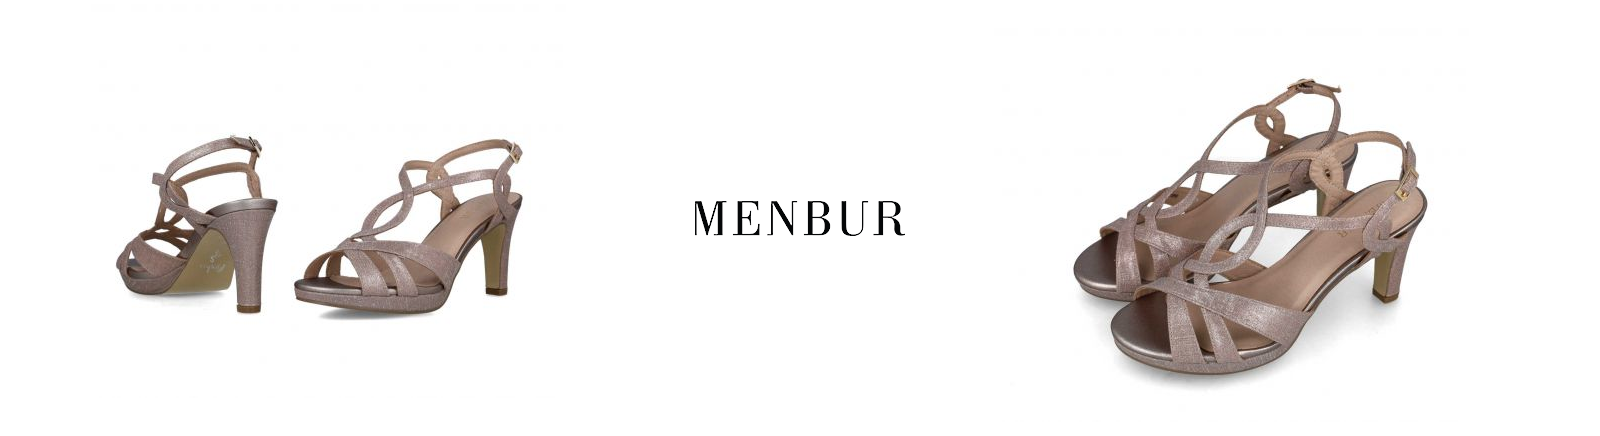 Menbur Markenschuhe online kaufen im Juppen Schuhe Shop